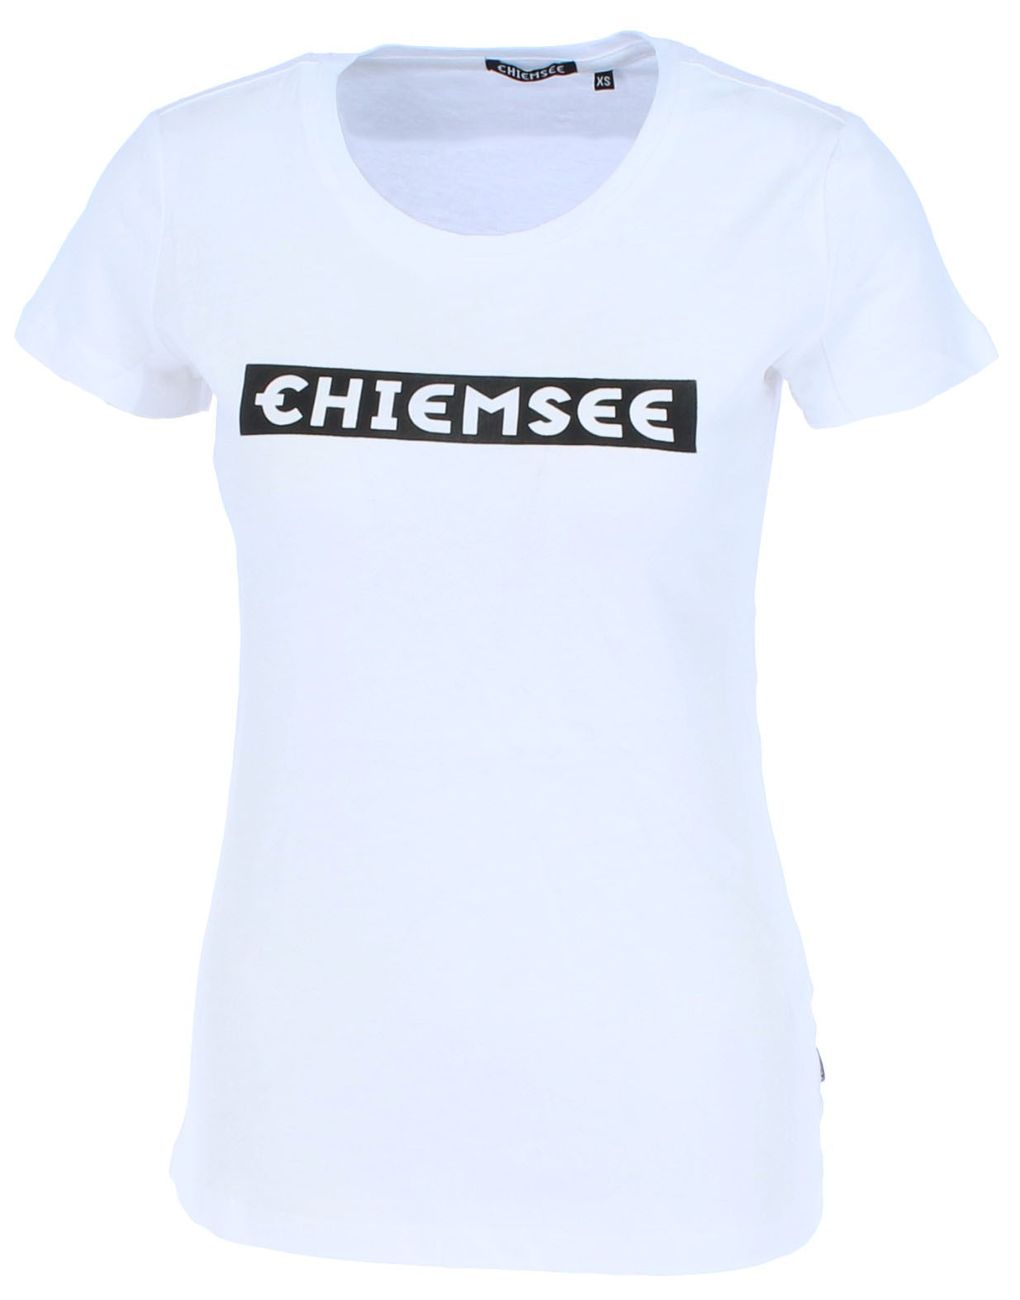 CHIEMSEE Damen T-Shirt Blockprint 13191201 - Chiemsee - SAGATOO - 4054583315309